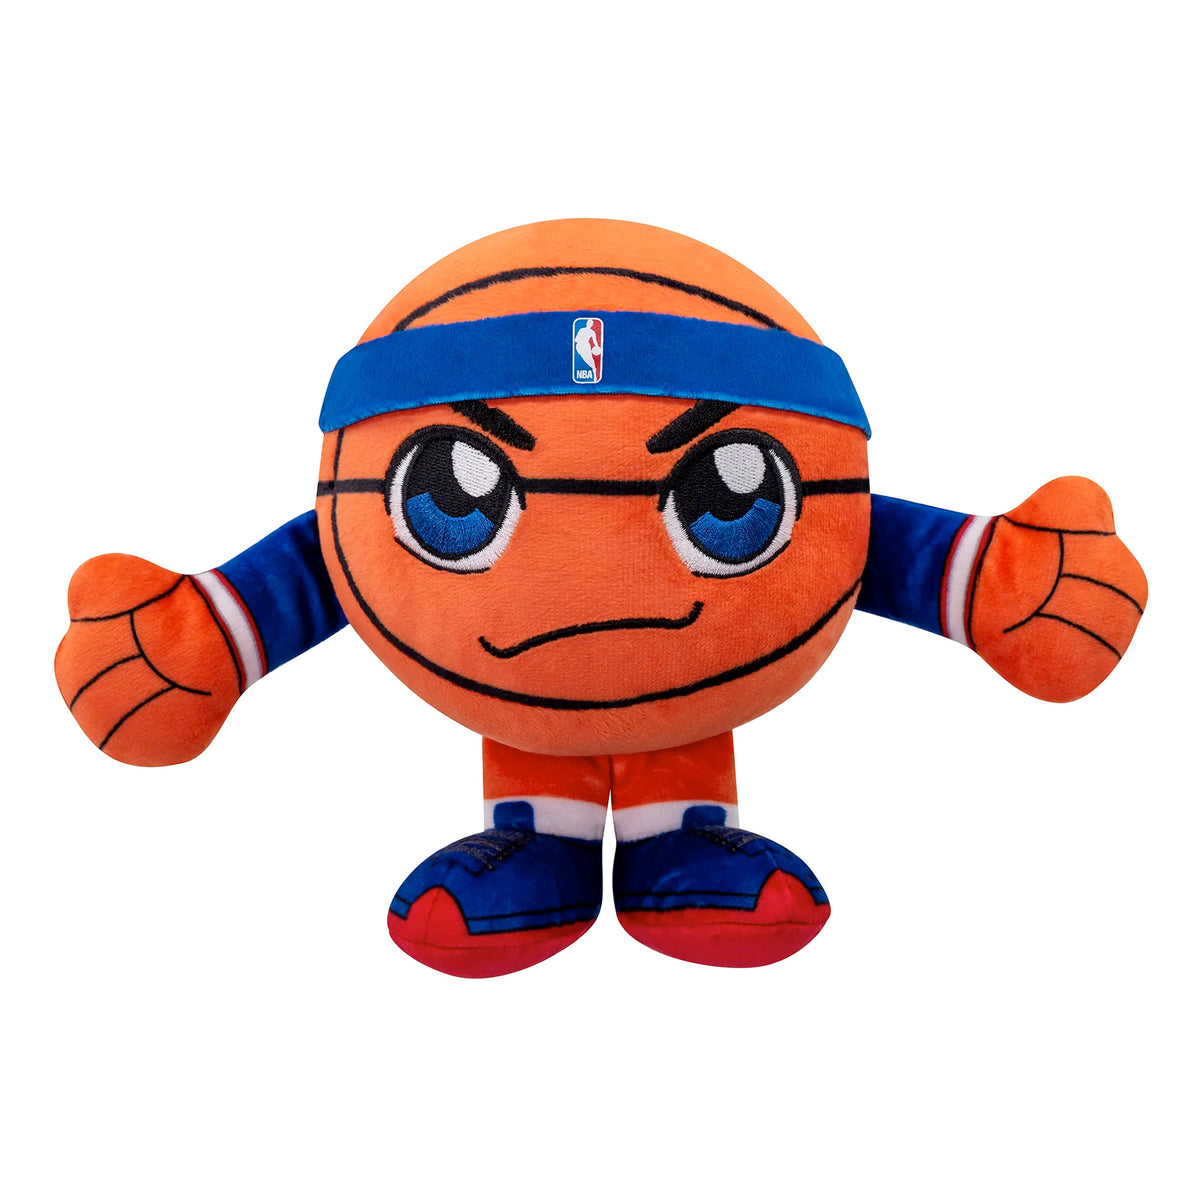 Detroit Pistons Kuricha Basketball Sitting Plush Toy